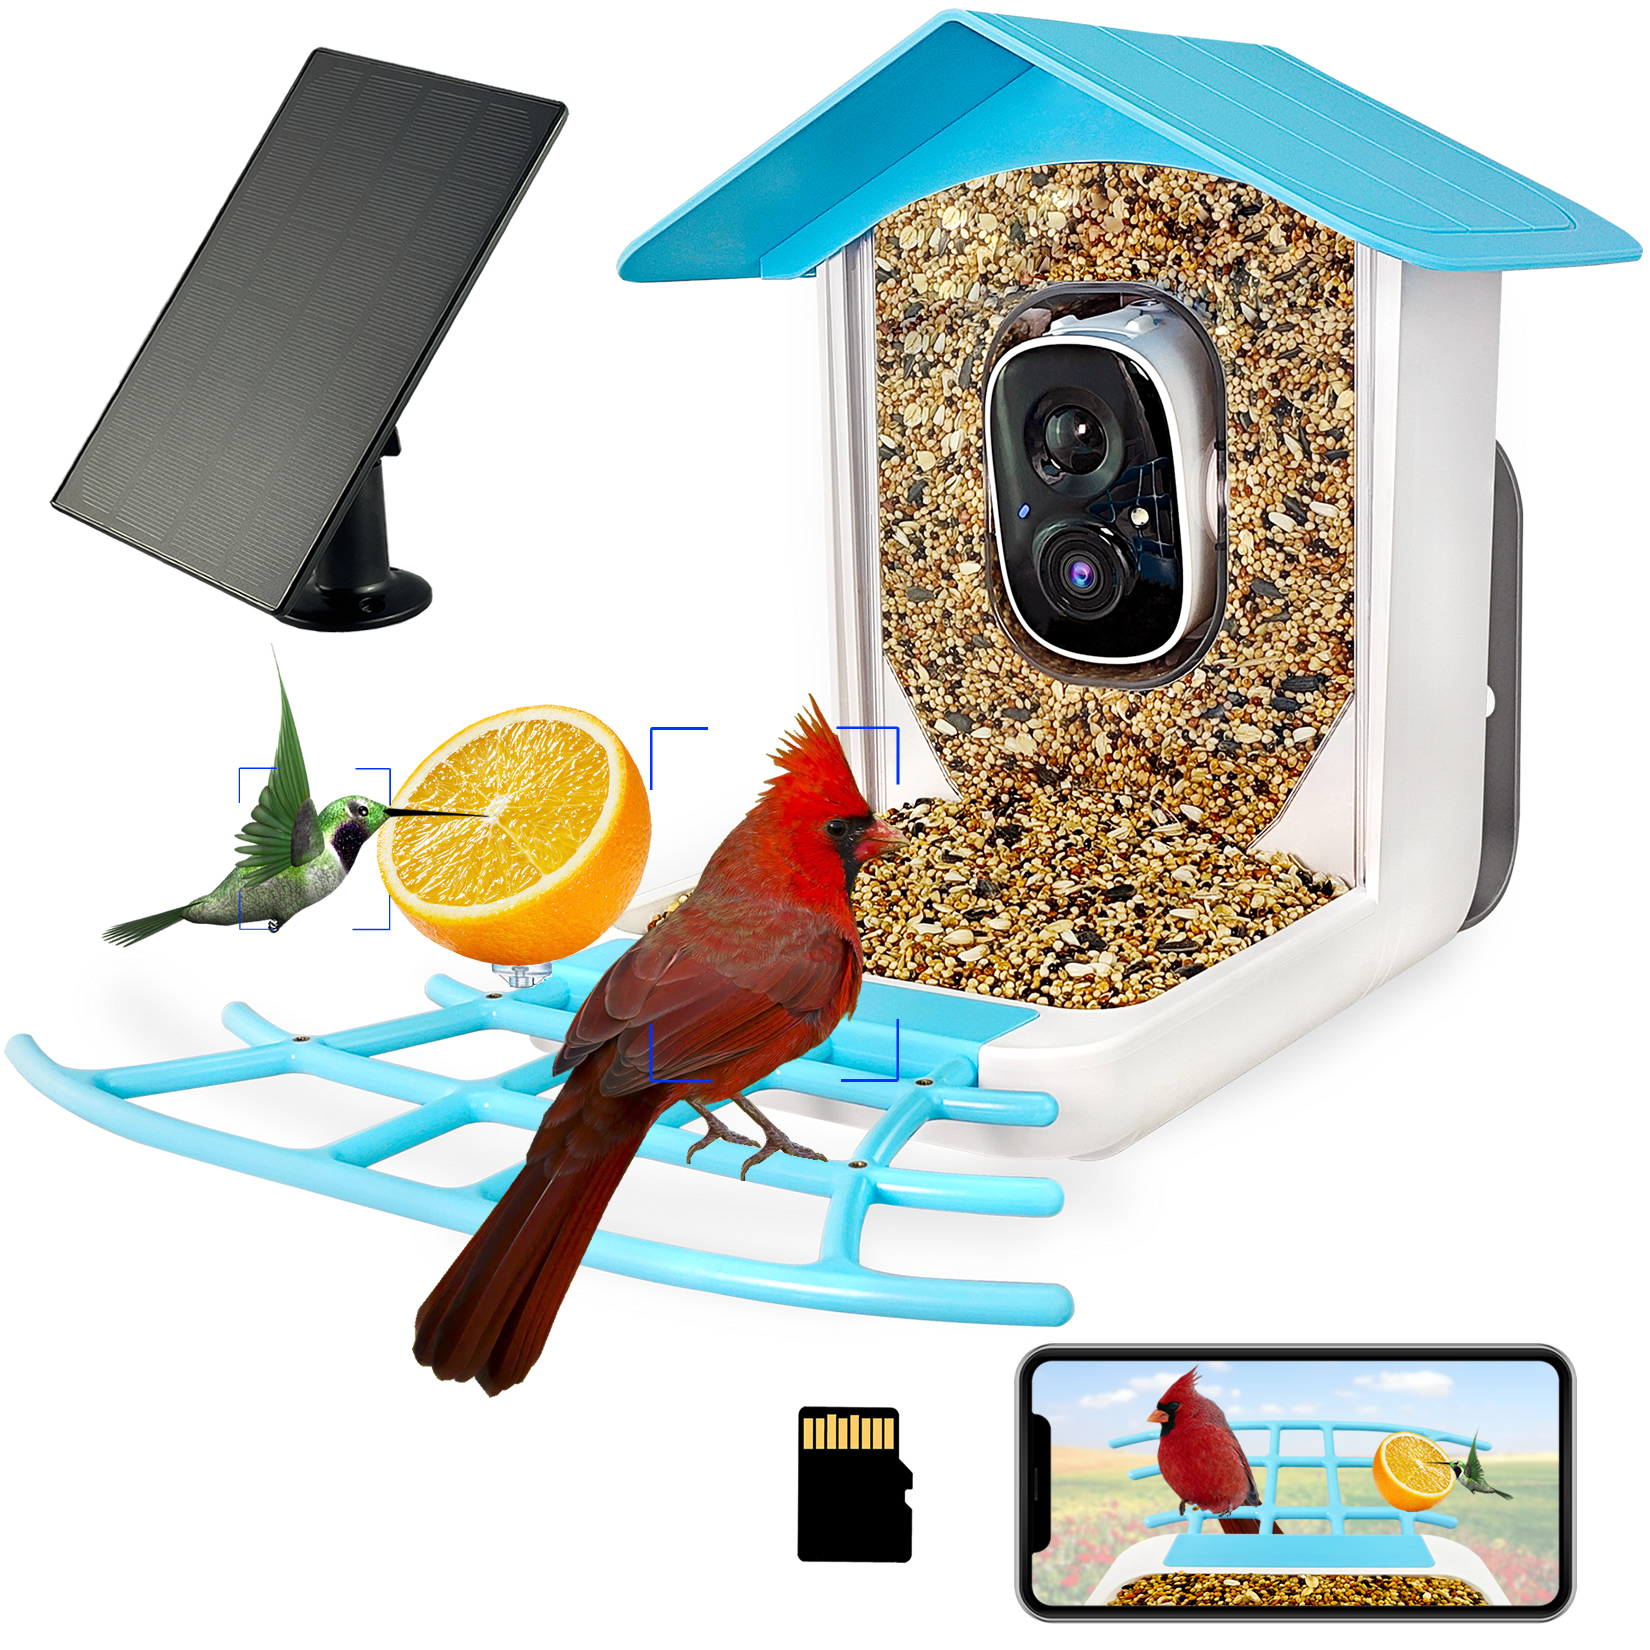 001 bird feeder with camera.jpg